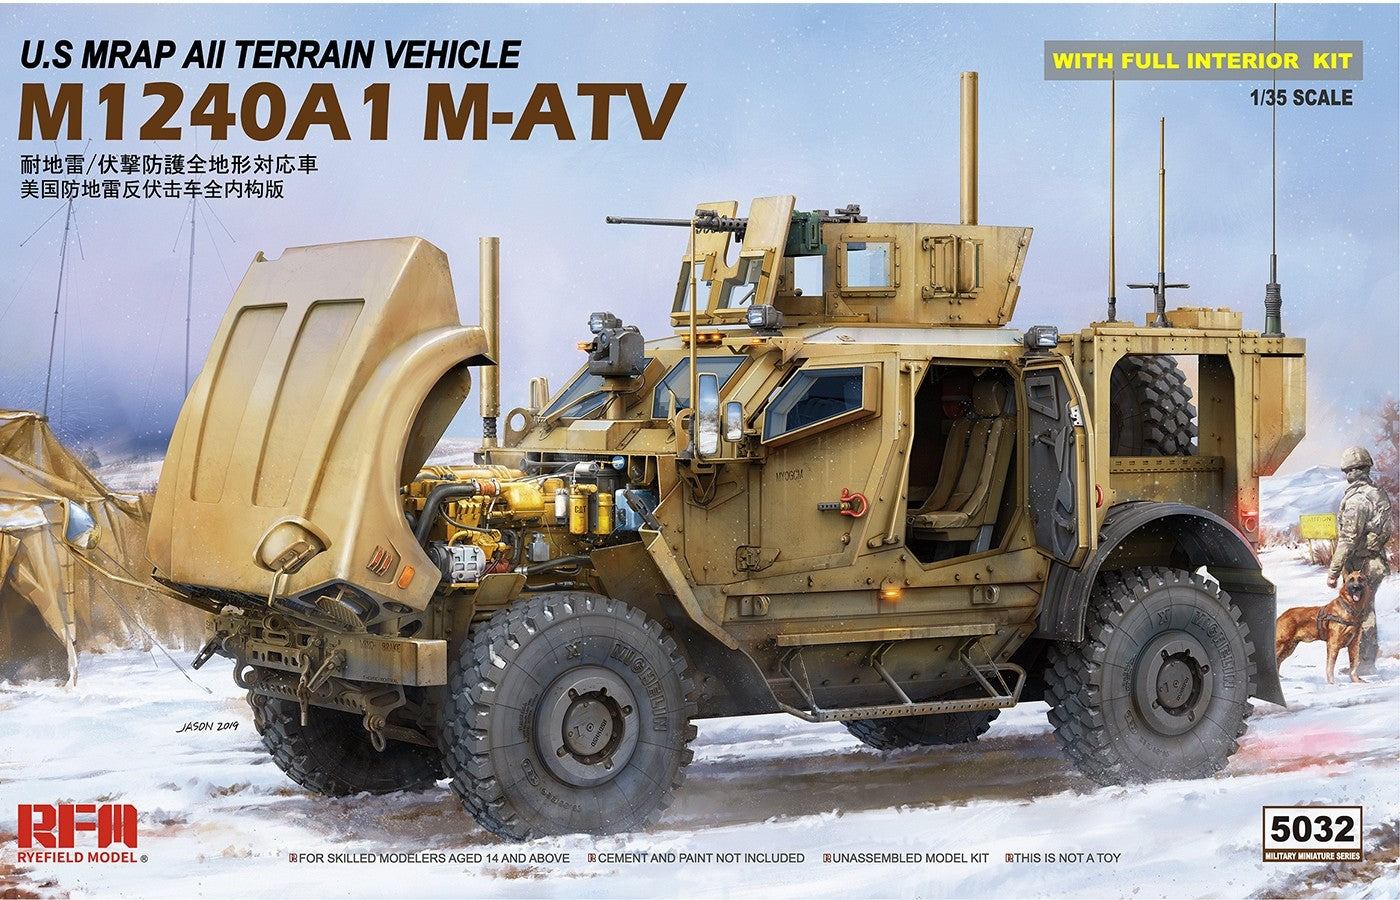 U.S MRAP All Terrain Vehicle M1240A1 M-ATV with Full Interior